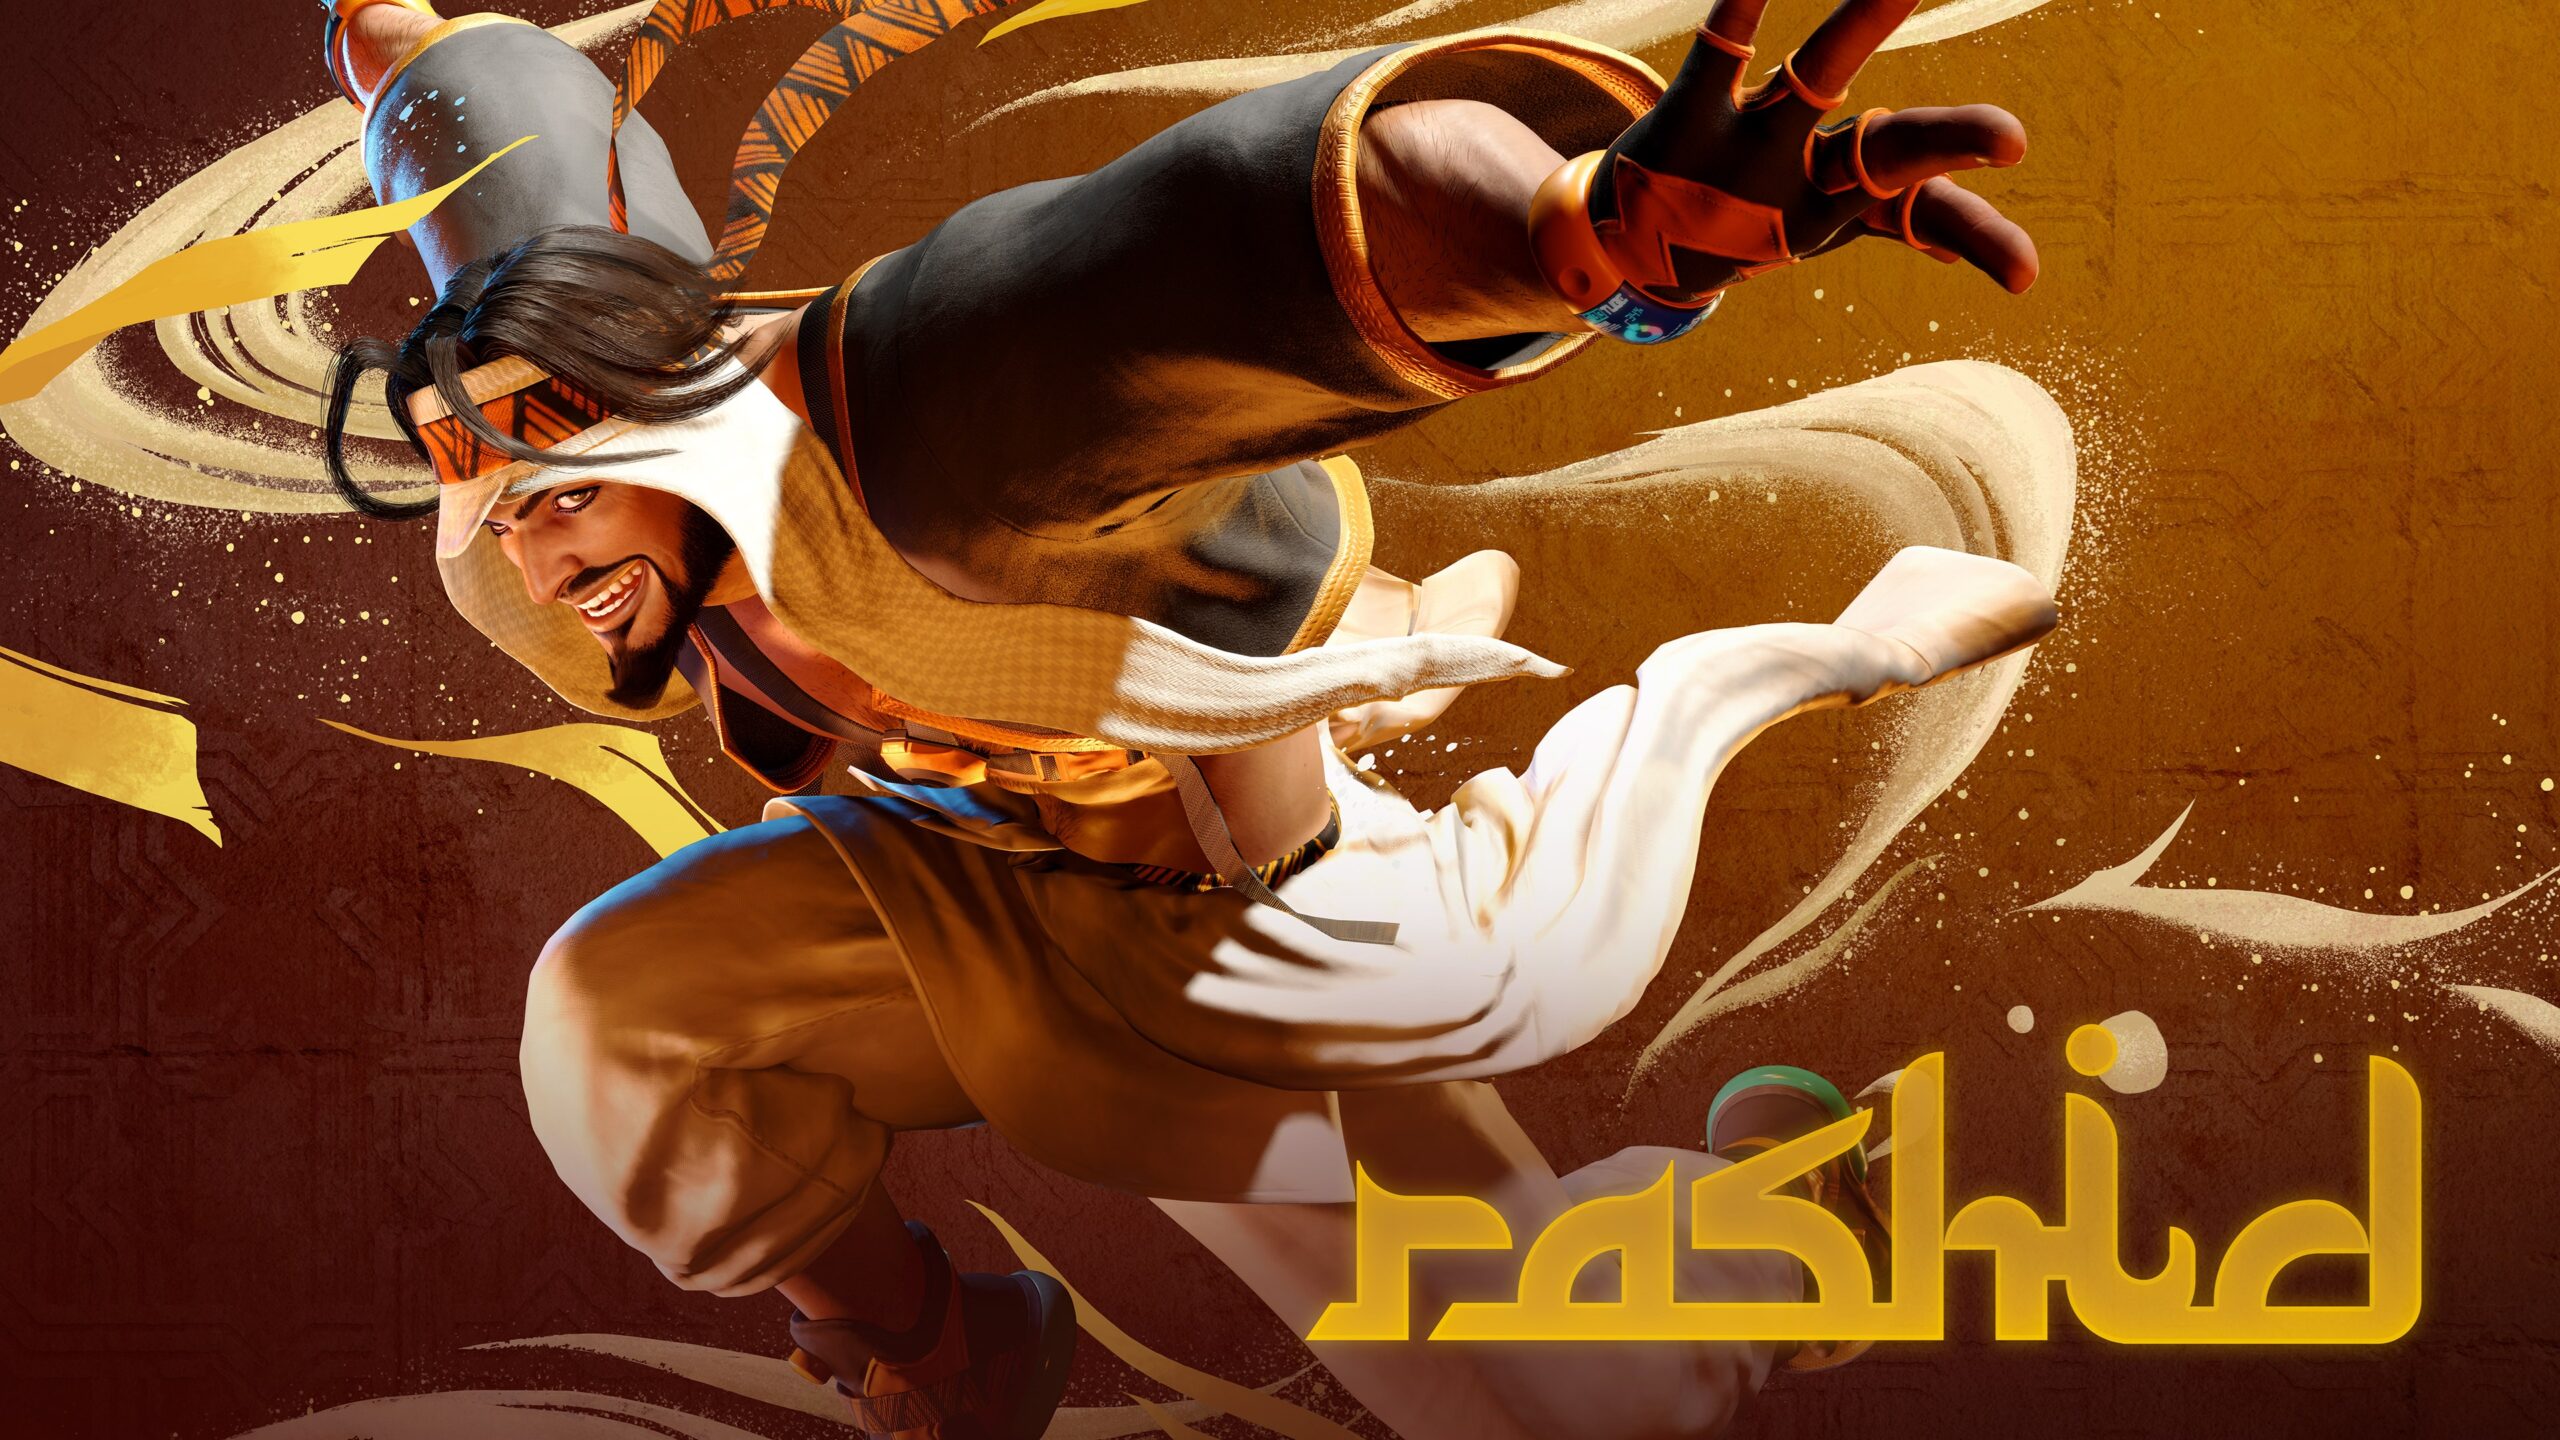 Windy warrior Rashid is Street Fighter 6’s first DLC fighter